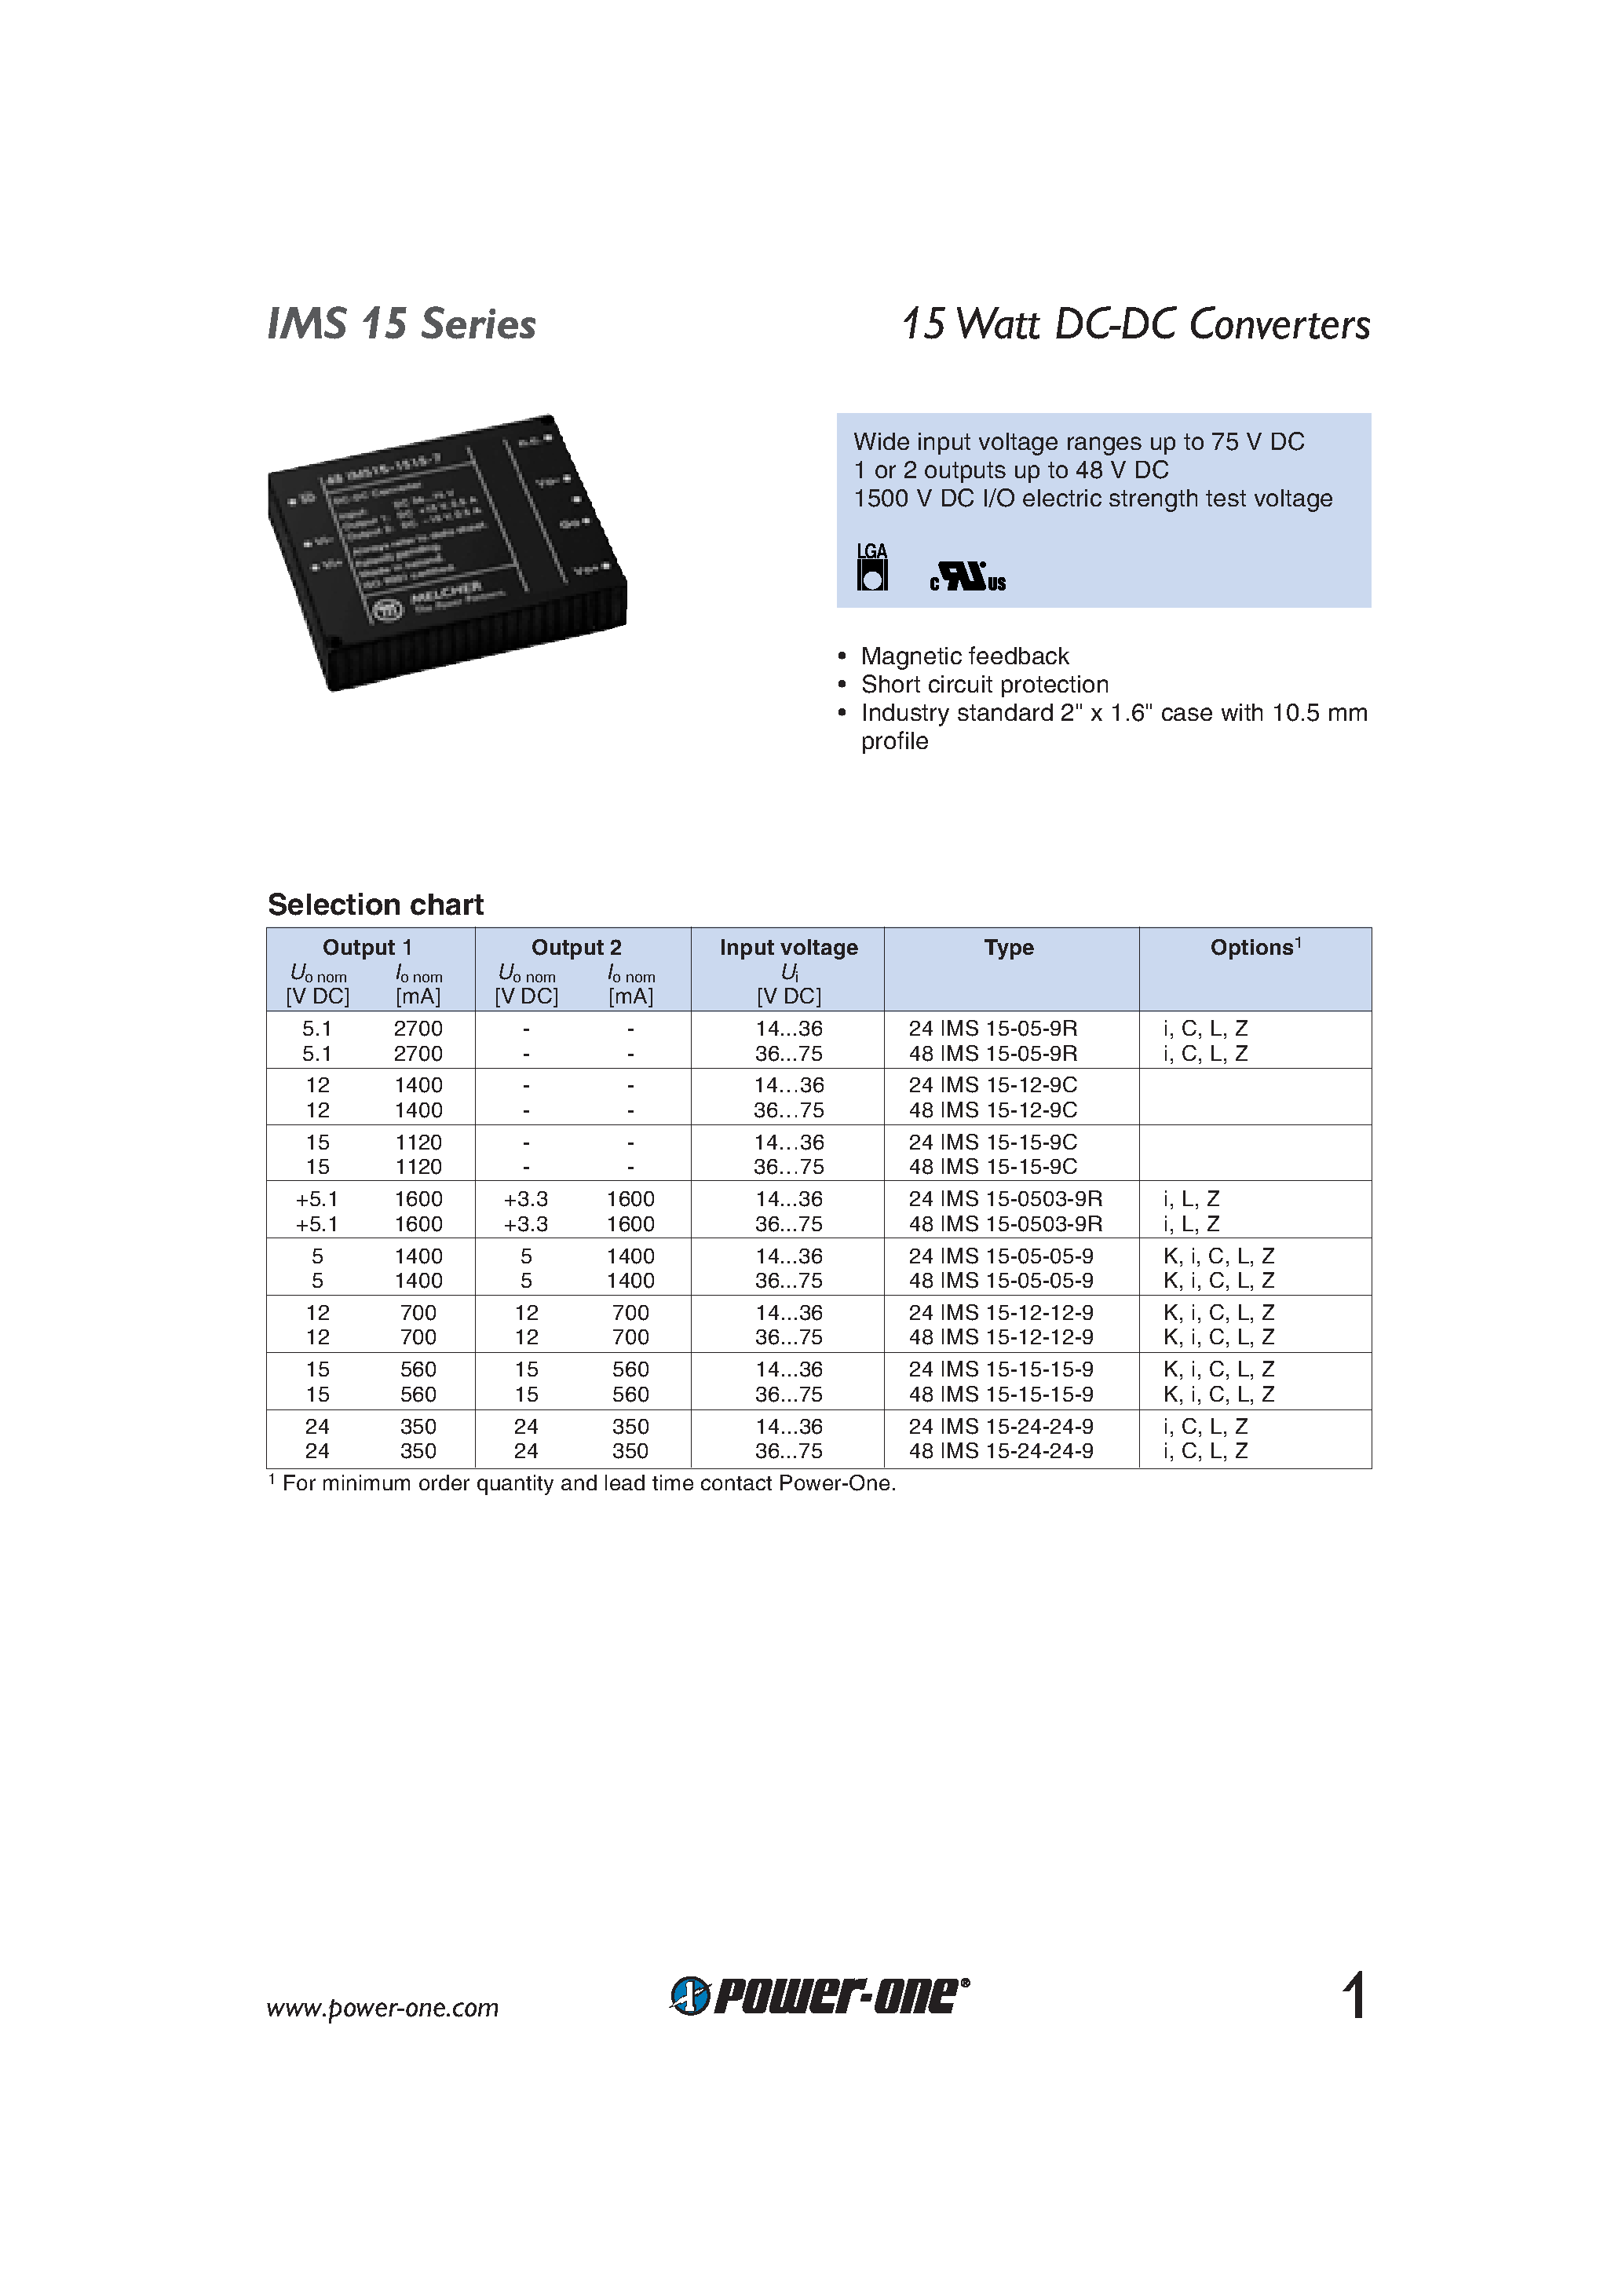 Datasheet 48IMS15-12-12-9 - 15 Watt DC-DC Converters page 1